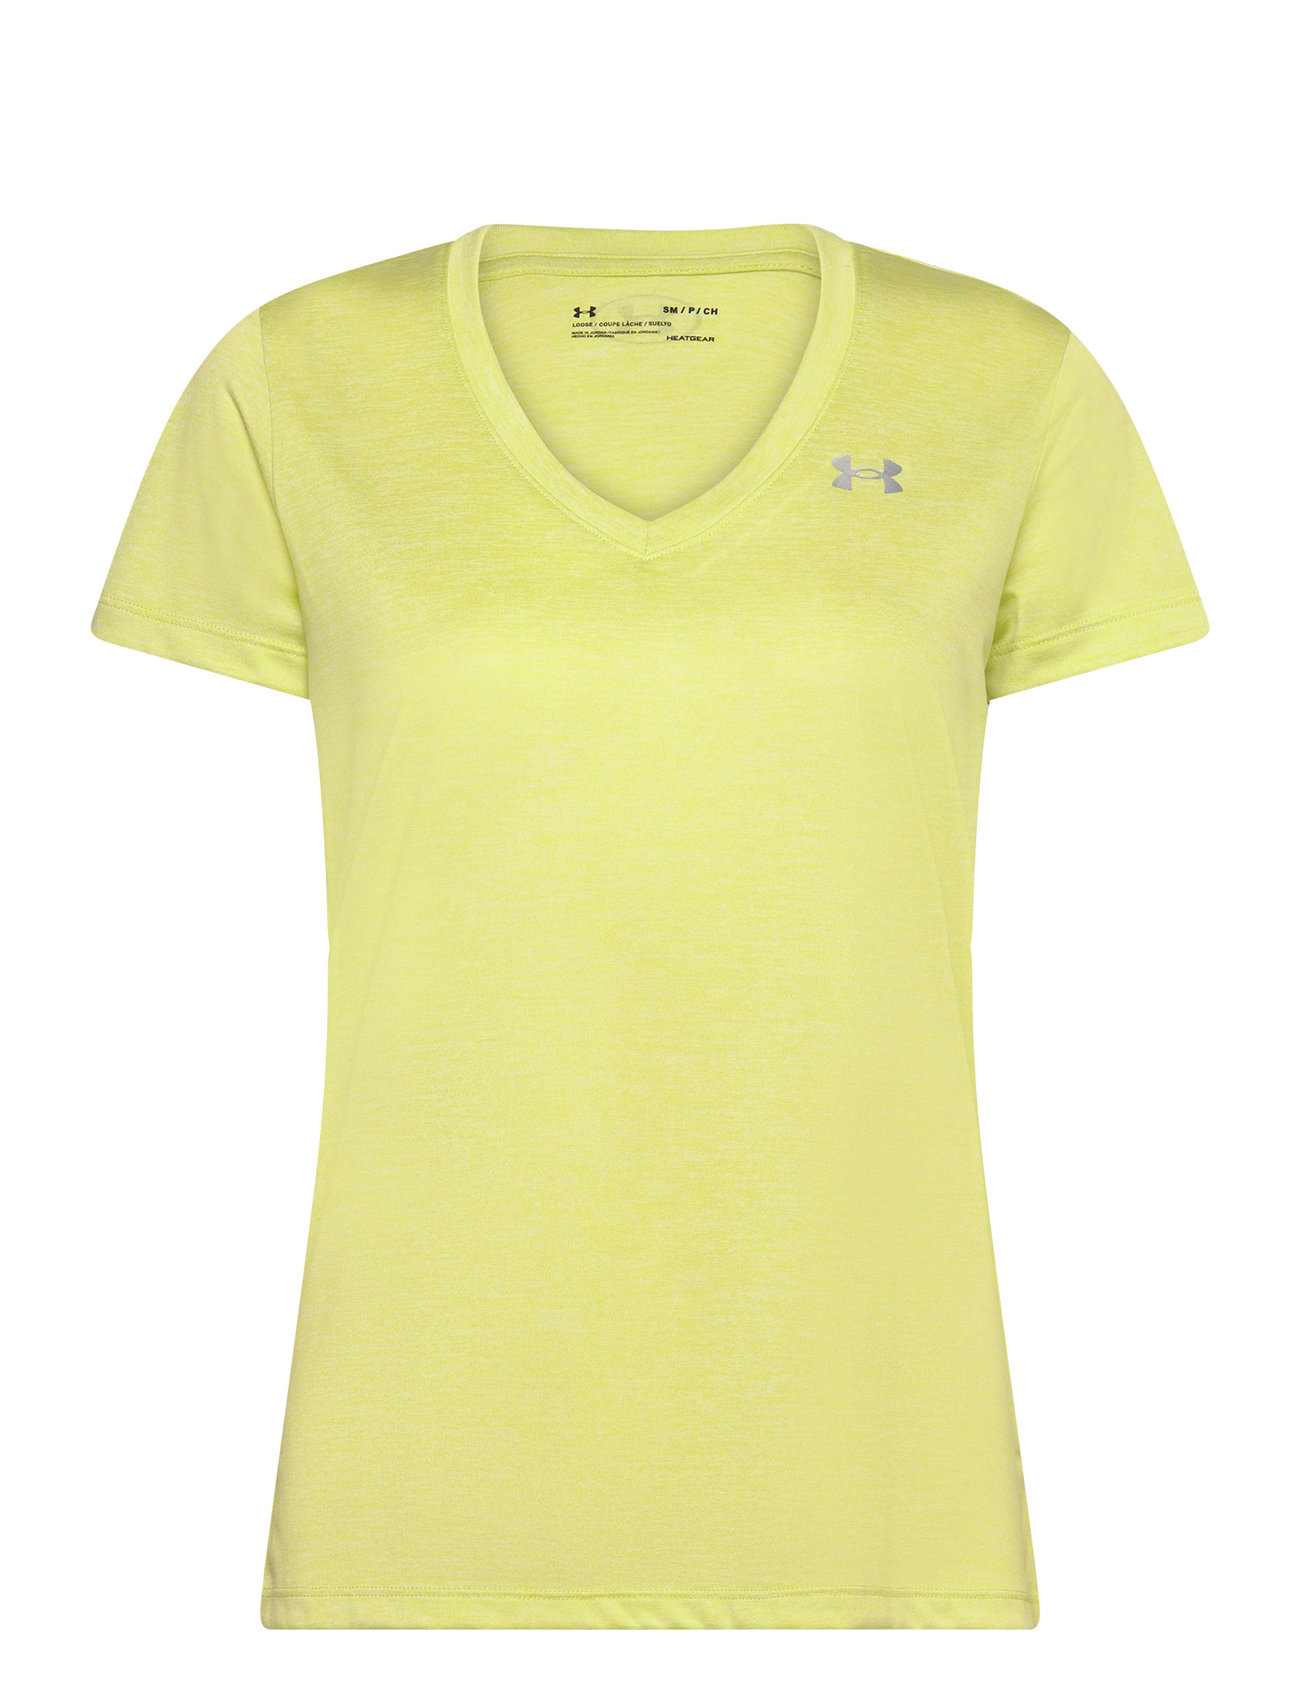 Tech Ssv - Twist Sport T-shirts & Tops Short-sleeved Yellow Under Armour